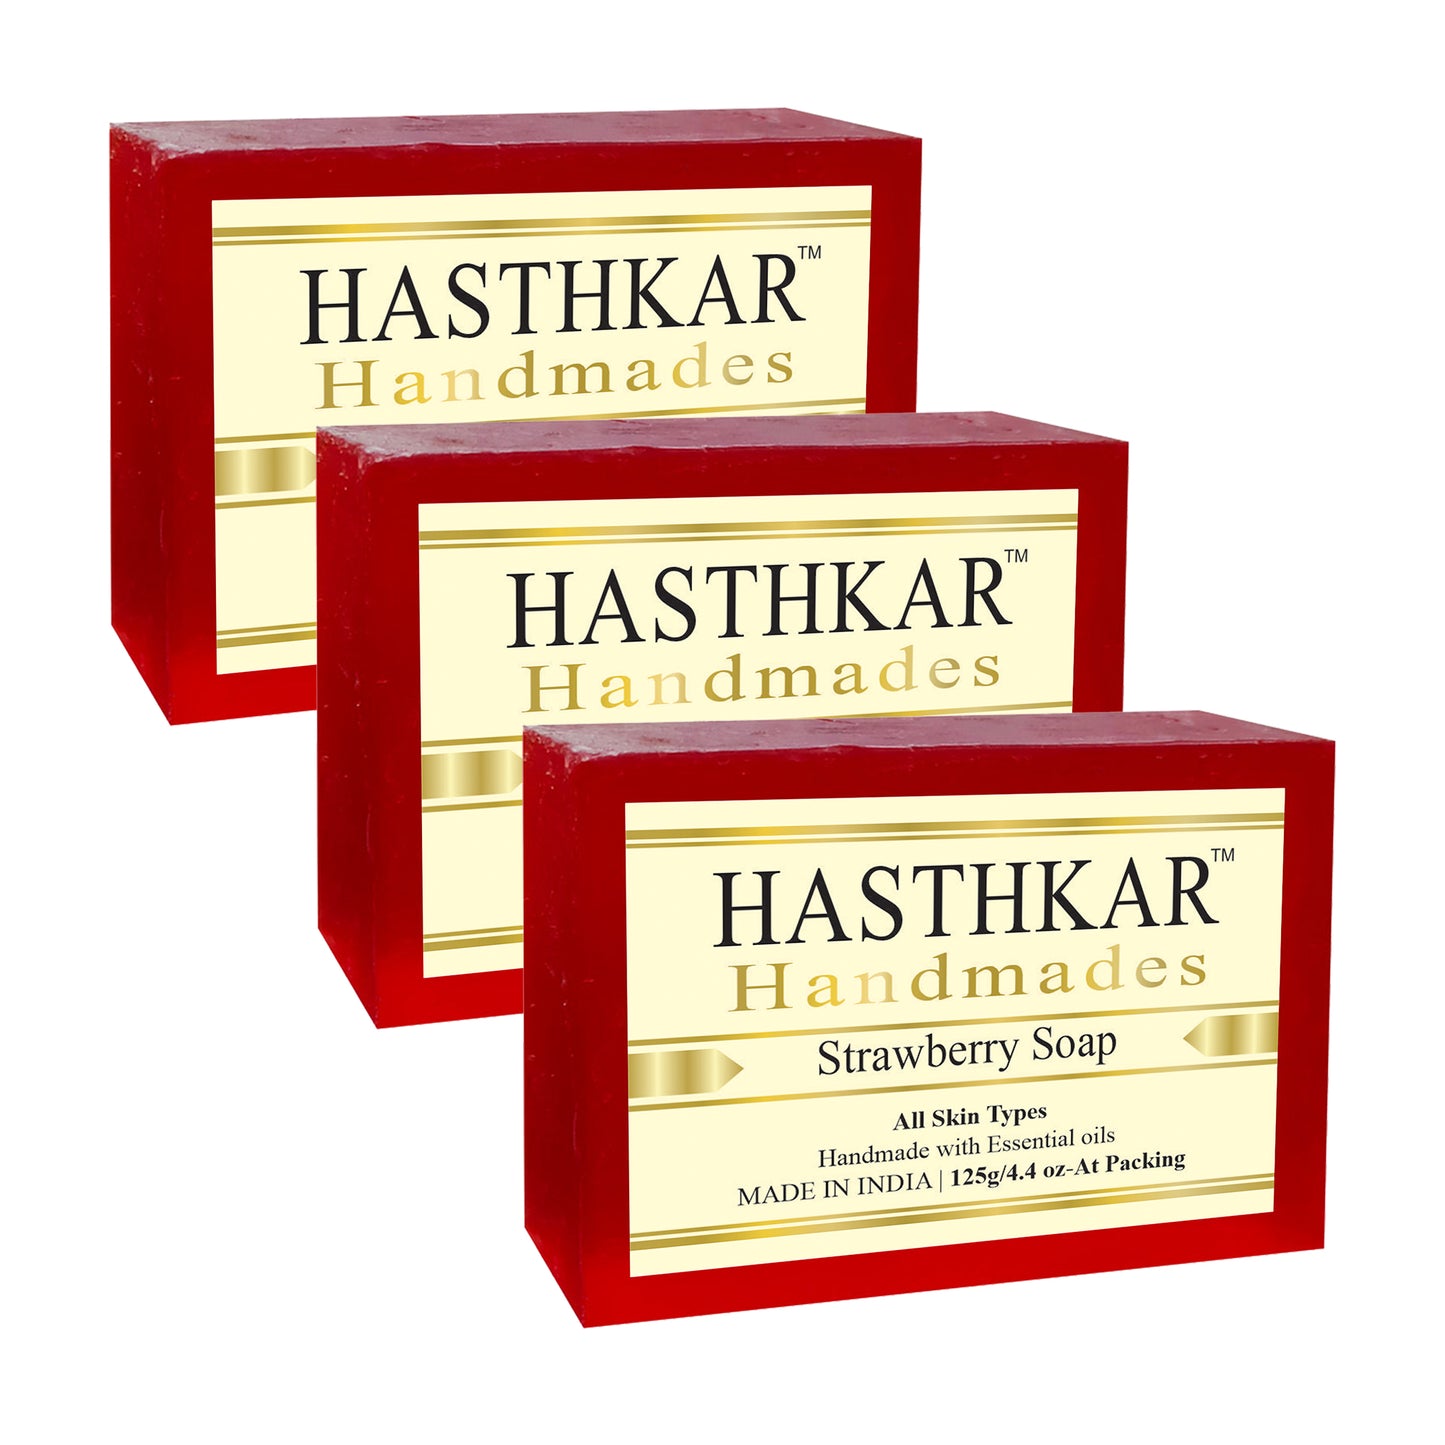 Hasthkar Handmades strawberry bath soap men women pack of 3